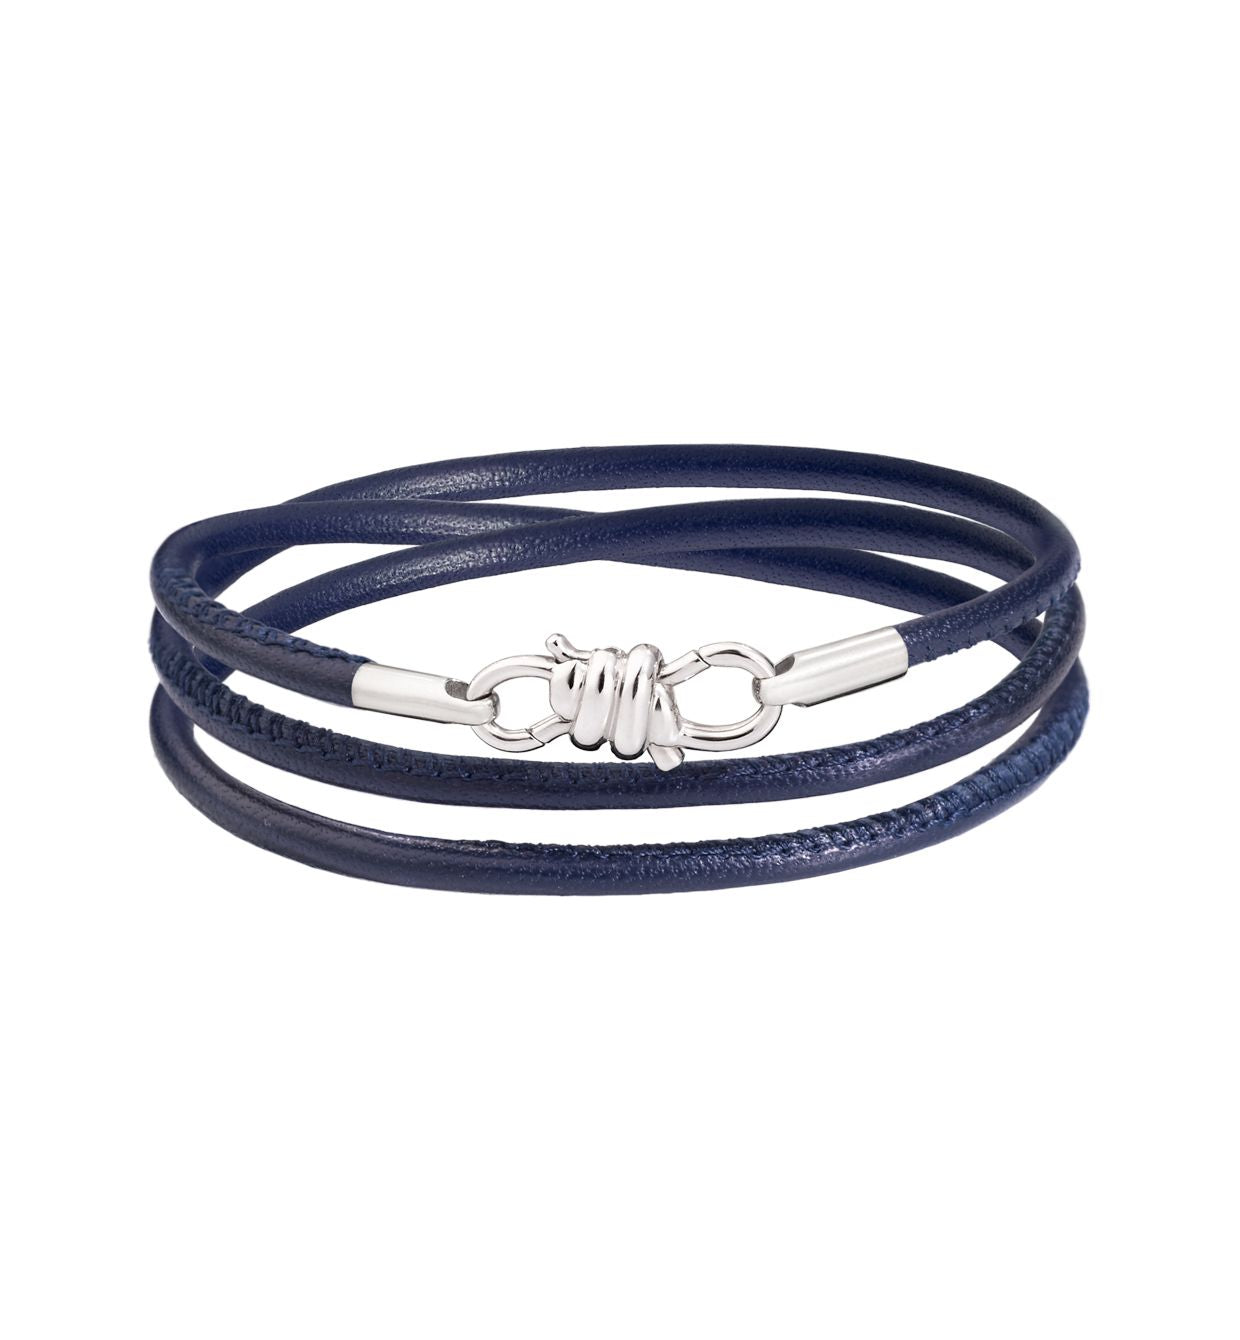 DoDo Nodo Bracelet in 18k White Gold with Midnight Blue Leather - Orsini Jewellers NZ